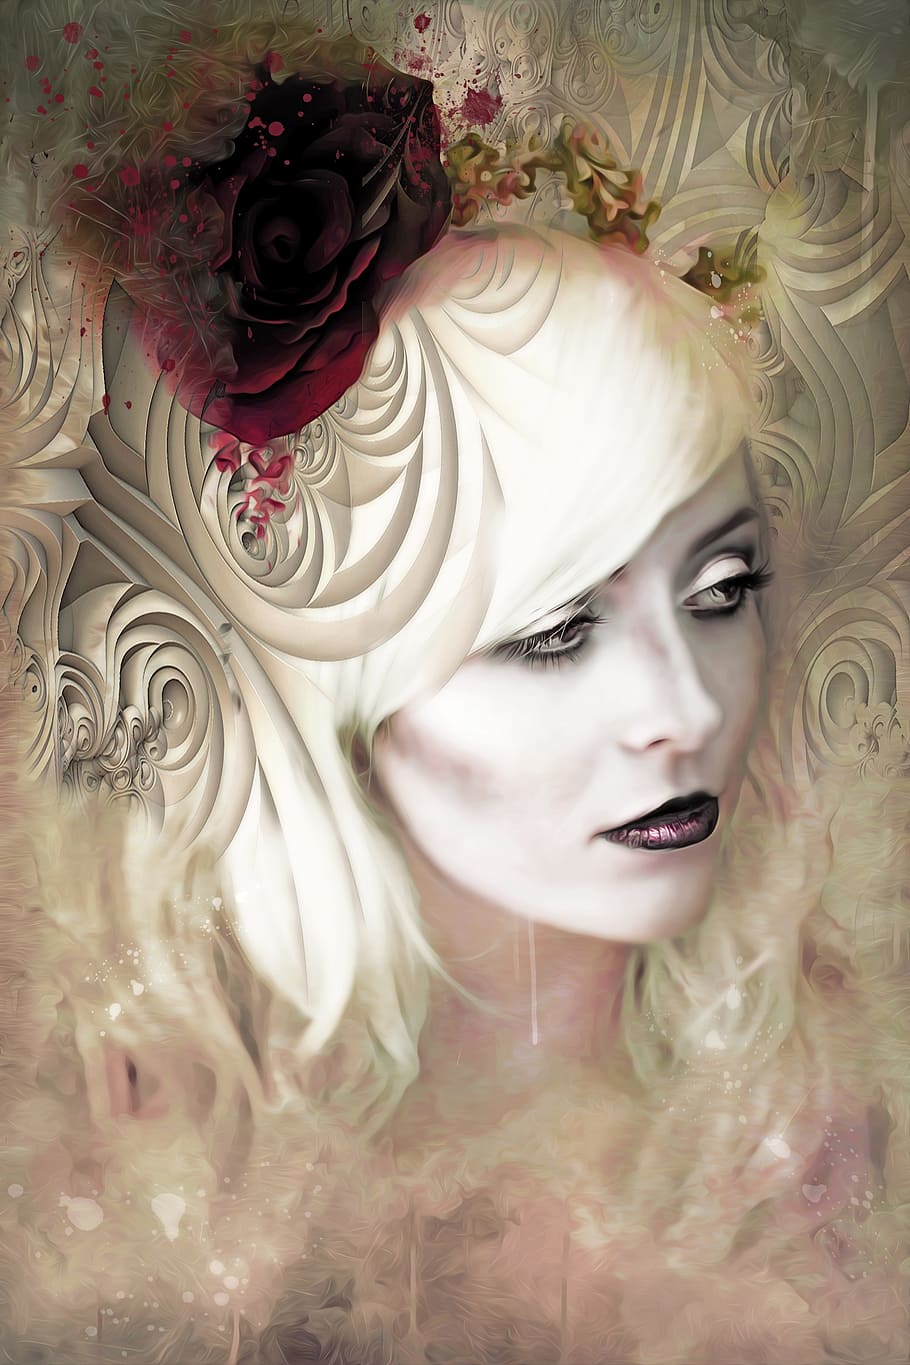 HD wallpaper: portrait of woman face, gothic, dark, fantasy